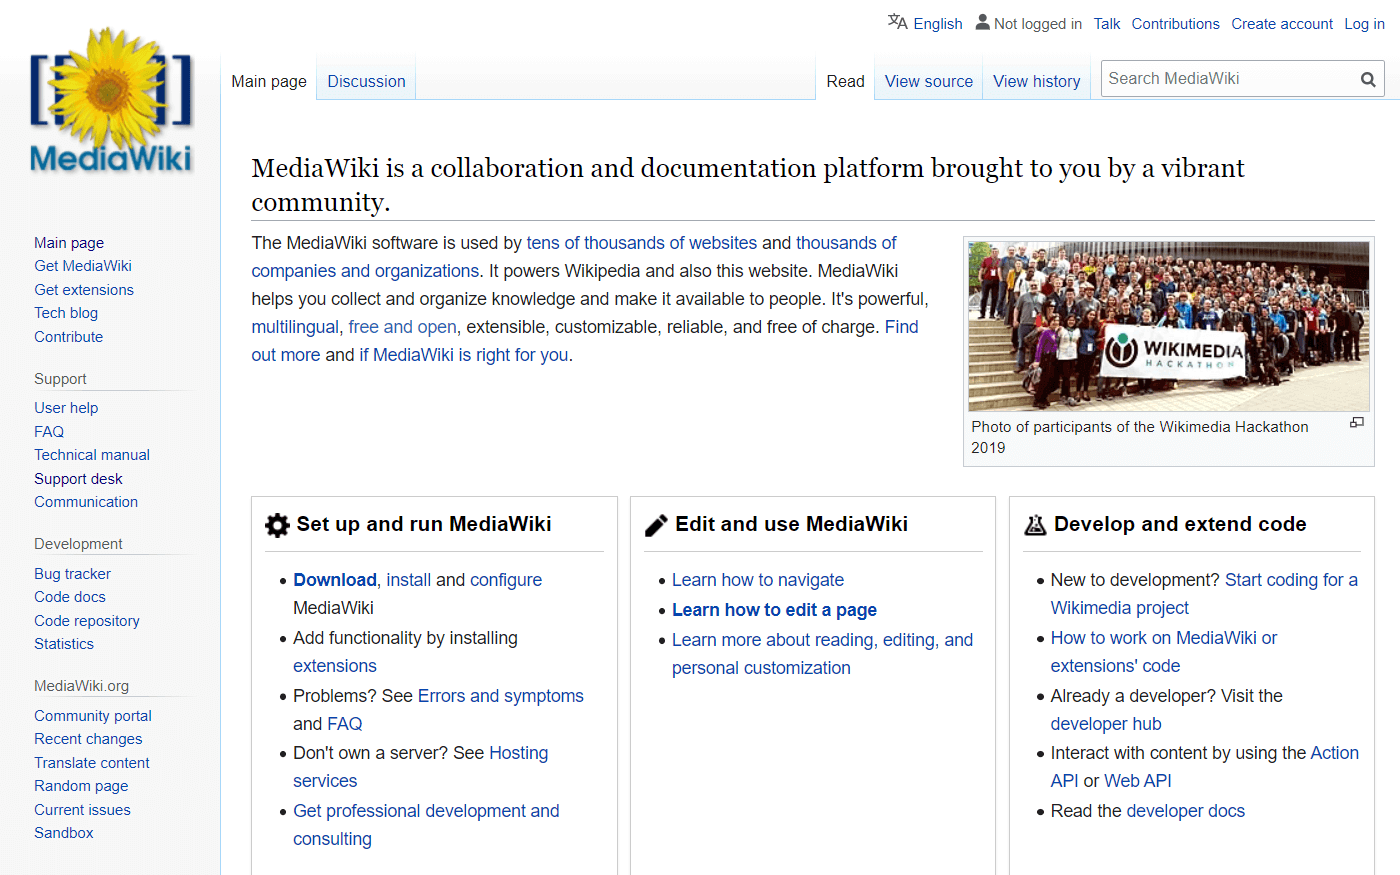 Free wiki software MediaWiki